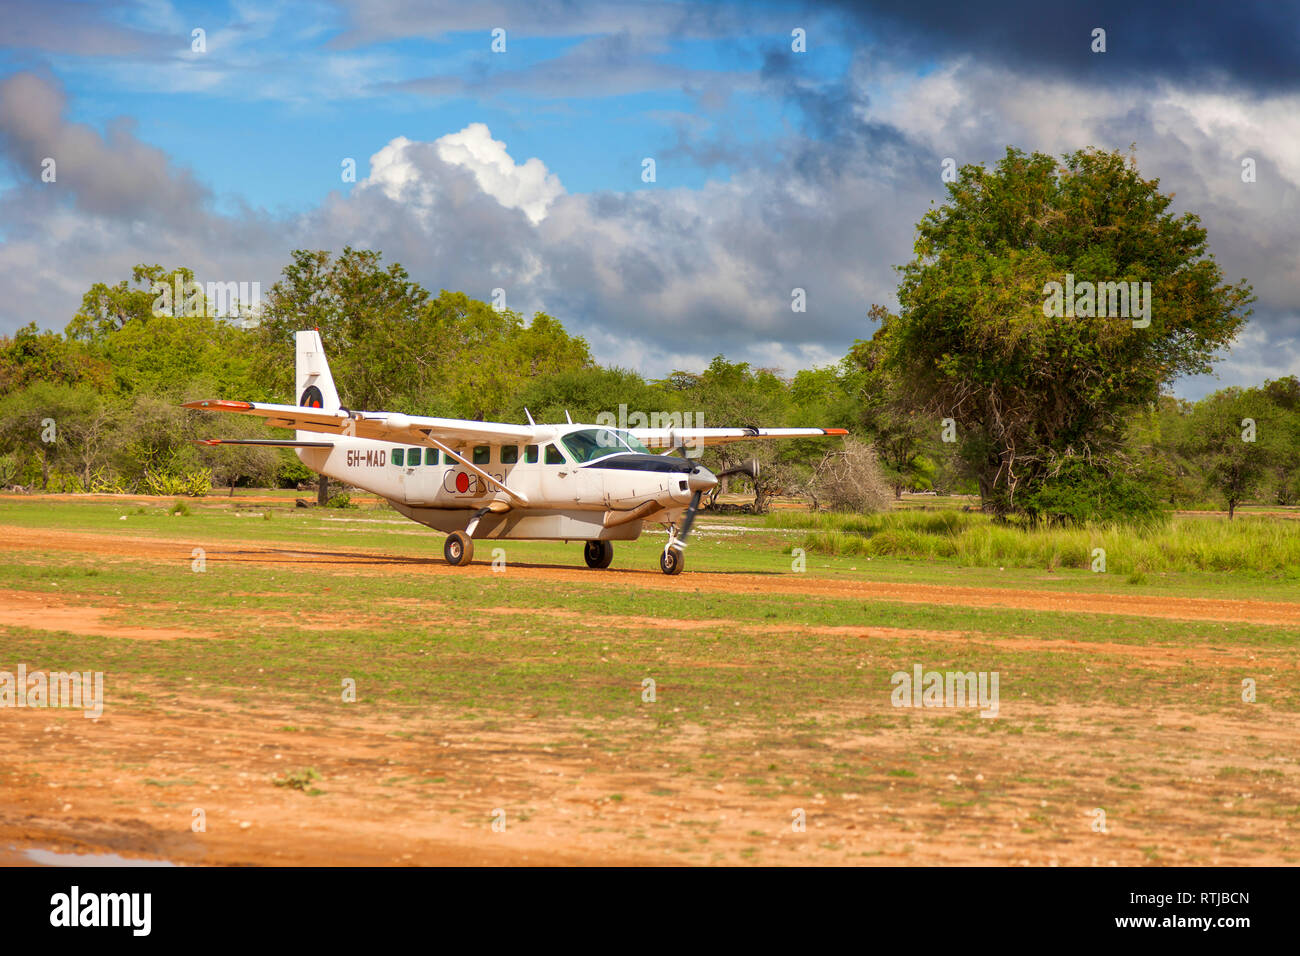 Airplane landing, Tanzania, East Africa Stock Photo